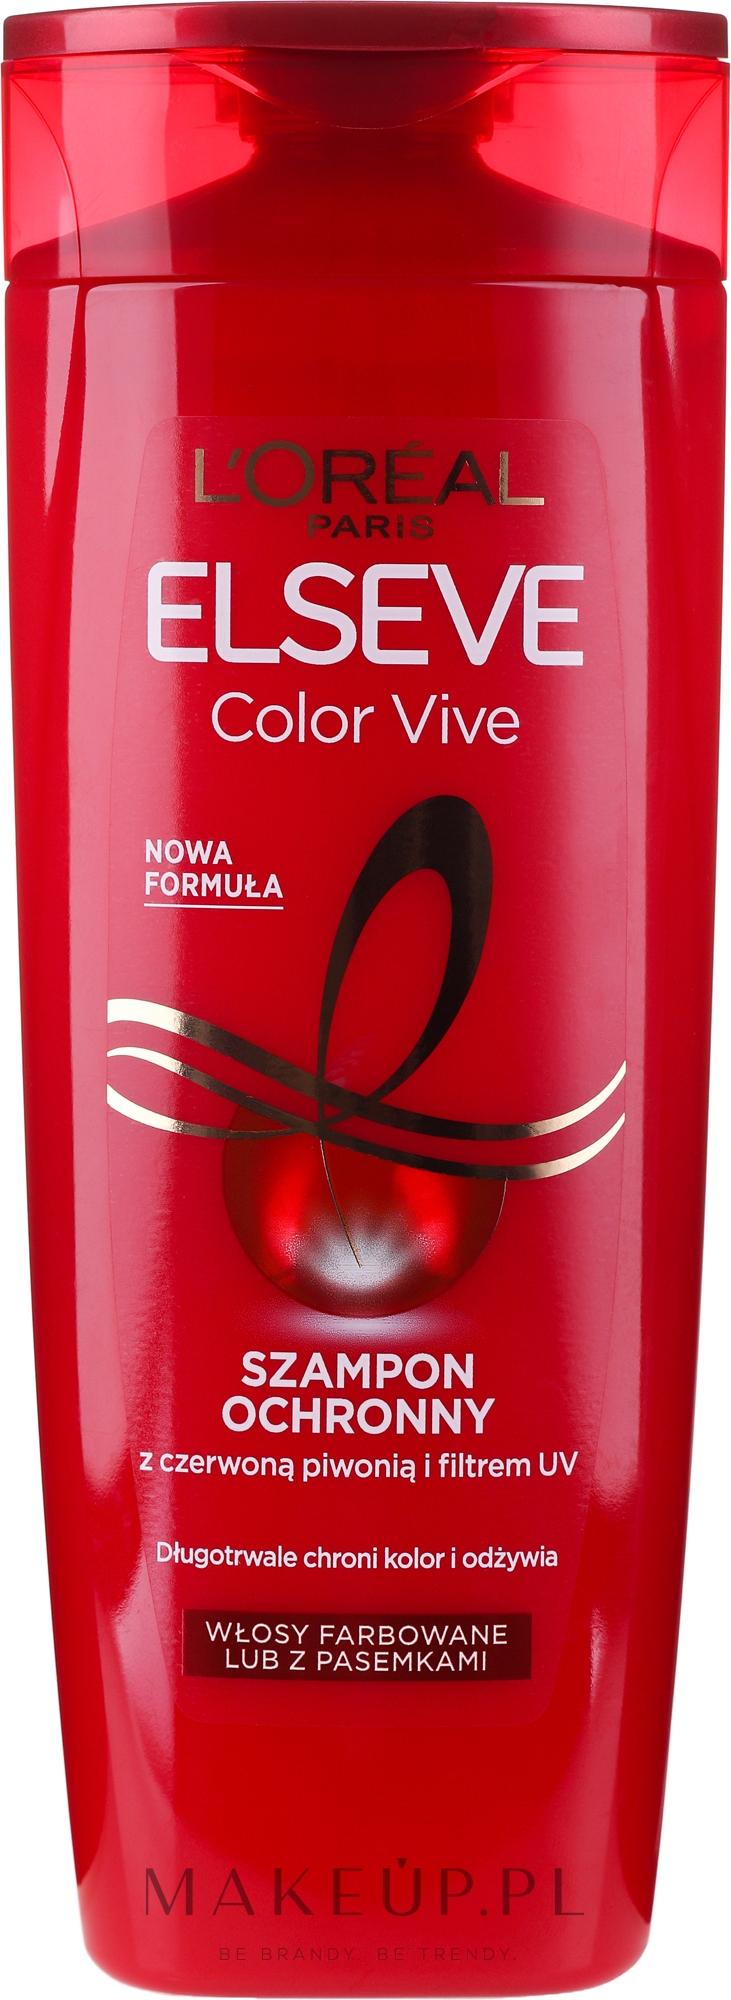 szampon elseve czerwony